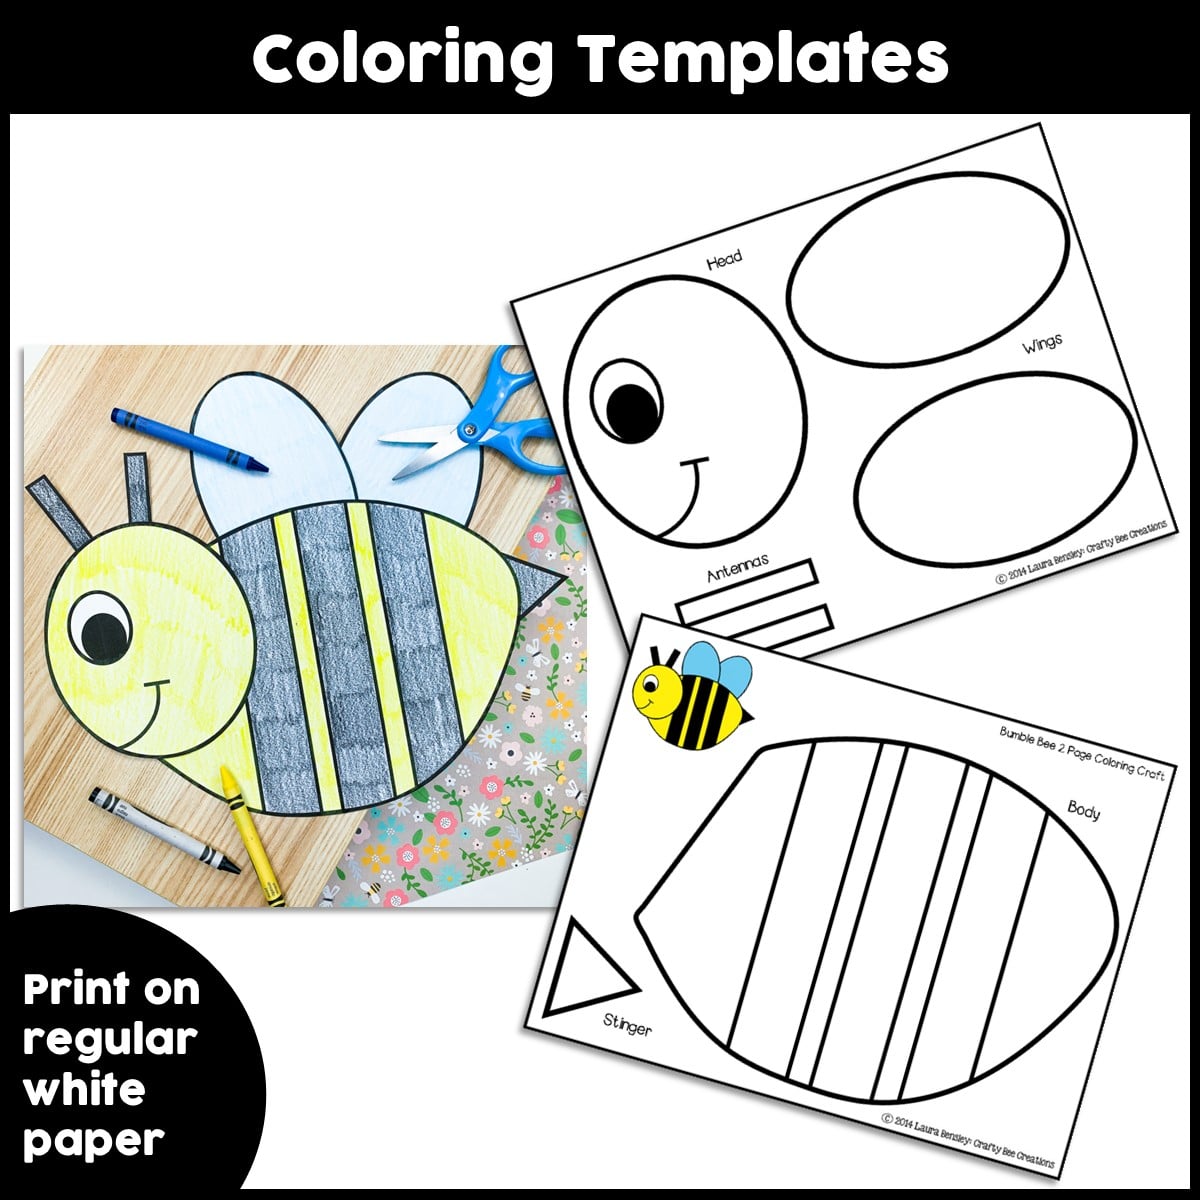 bee craft template